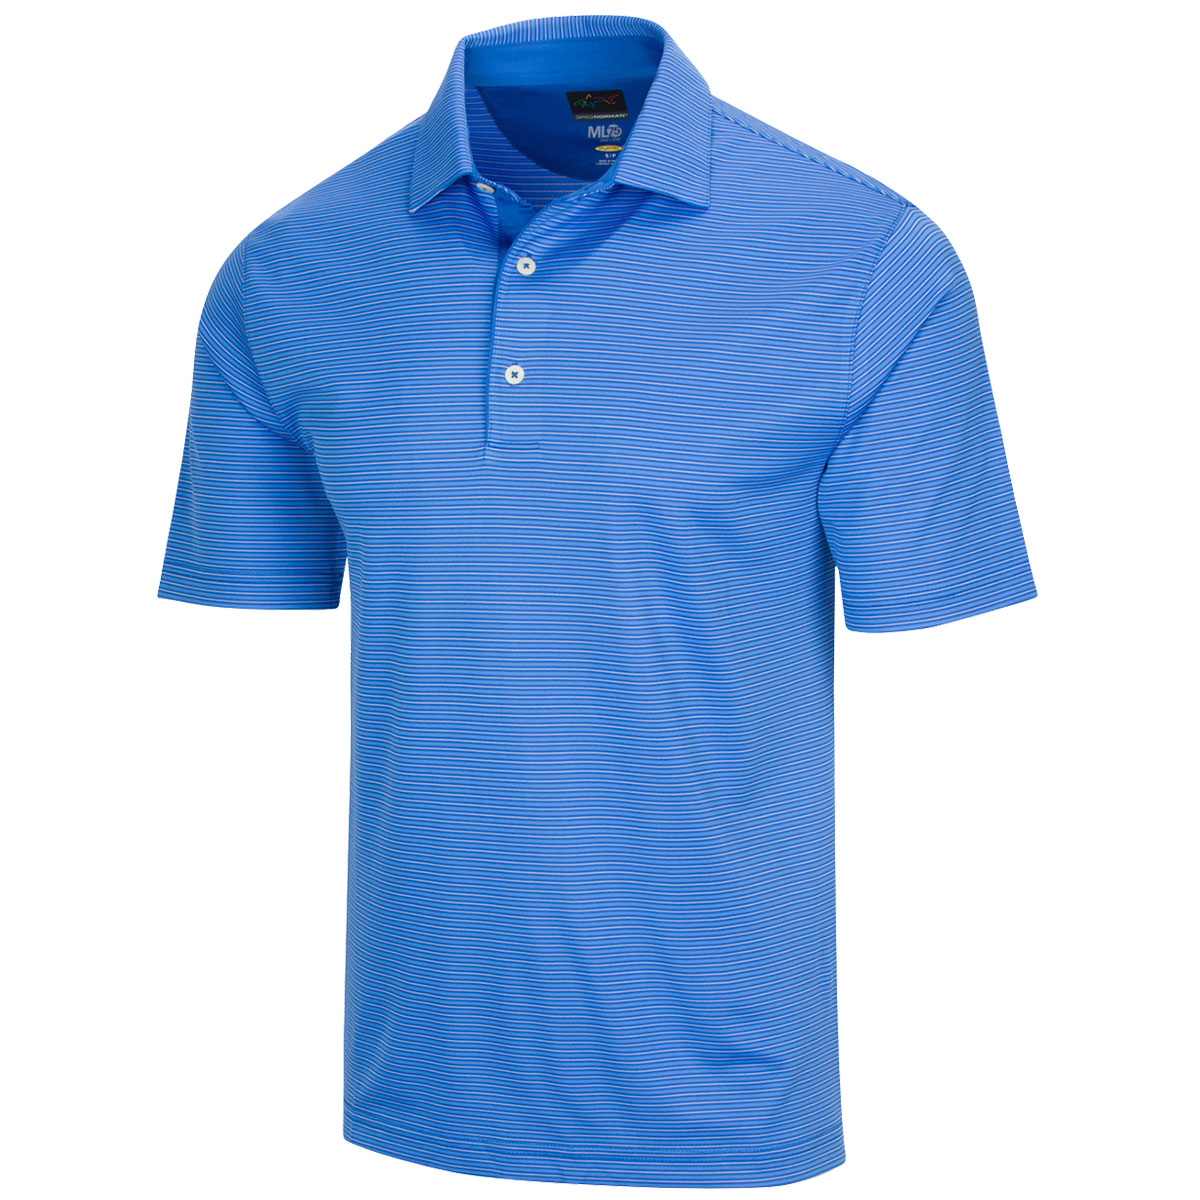 Greg Norman ML75 Stripe Polo Shirt from american golf